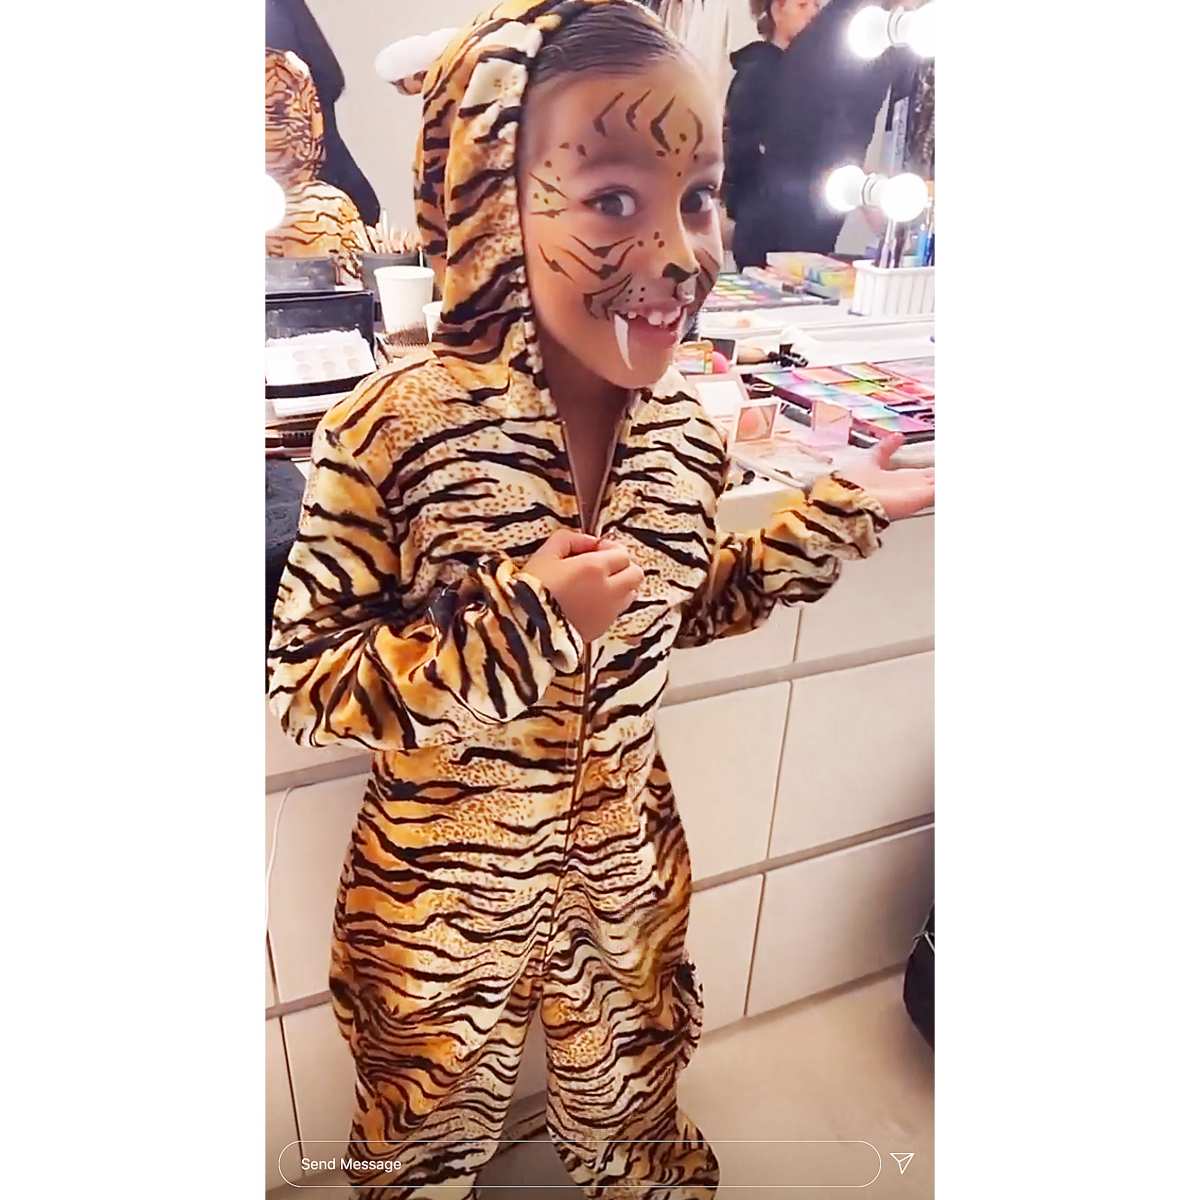 Skynd dig resultat torsdag Kim Kardashian Rocks 'Tiger King' Halloween Looks With 4 Kids: Pics